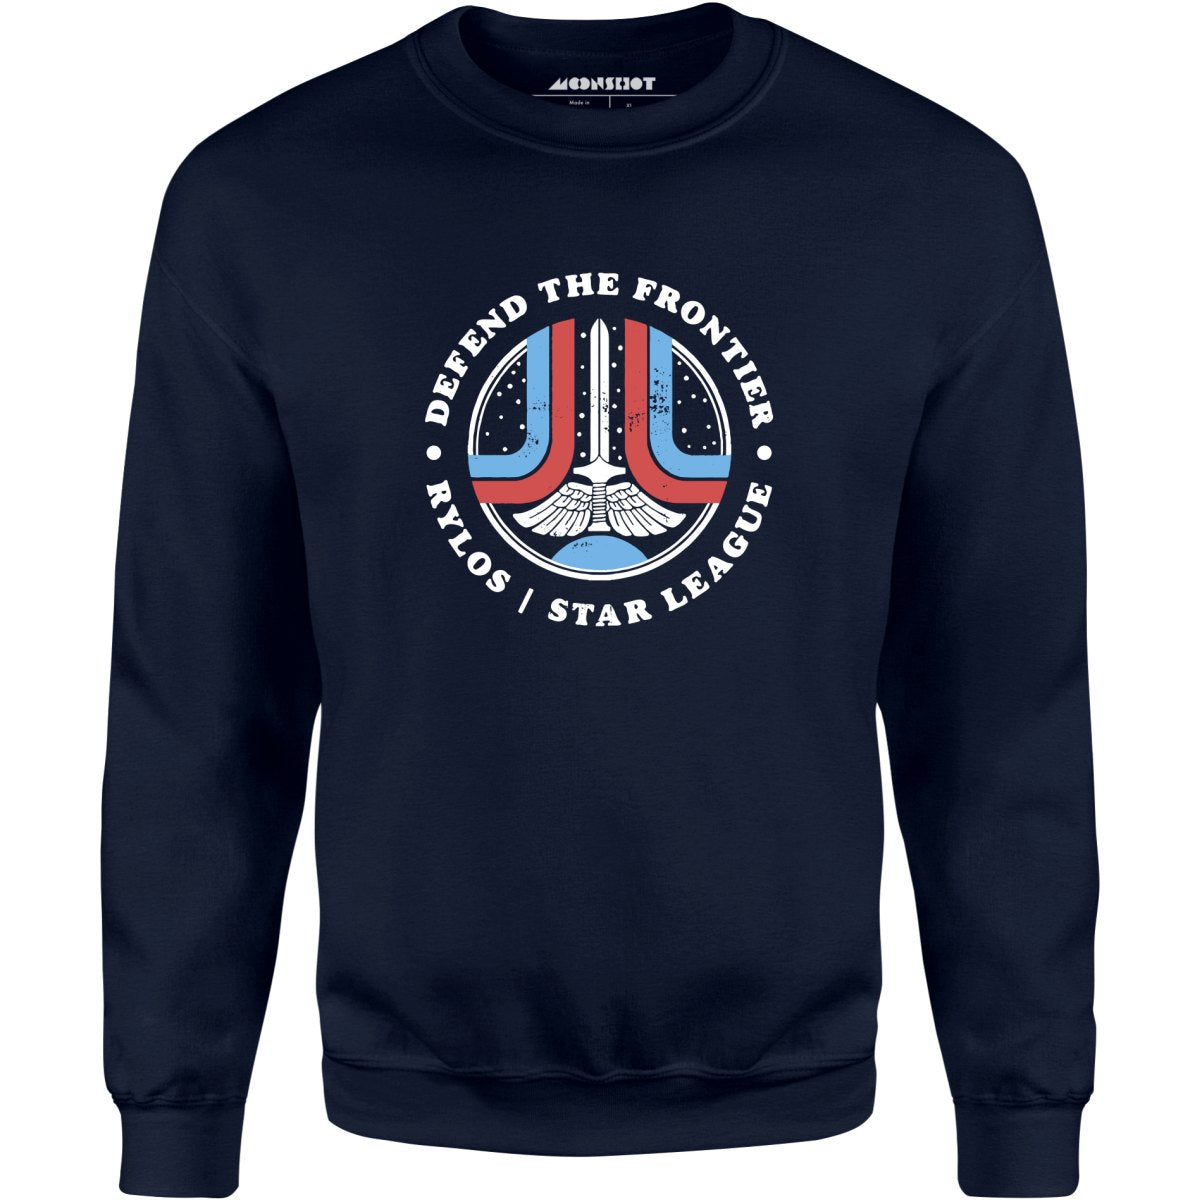 The Last Starfighter - Unisex Sweatshirt